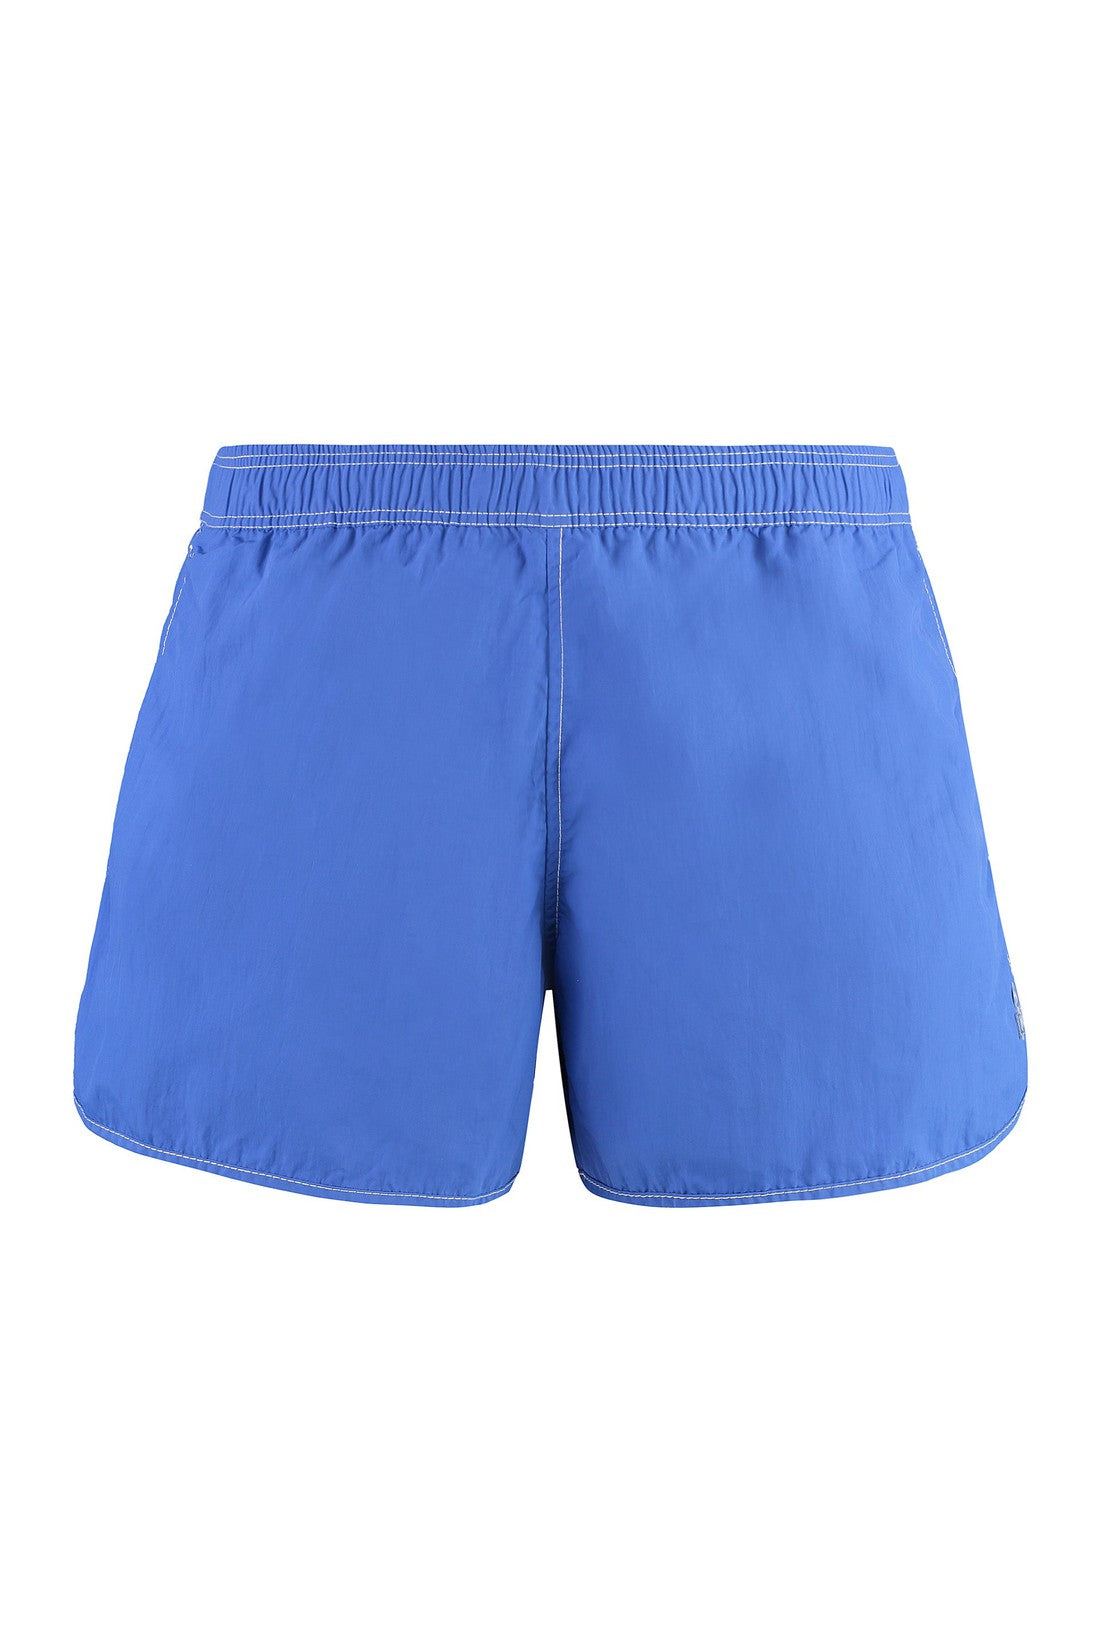 Marant-OUTLET-SALE-Nylon swim shorts-ARCHIVIST